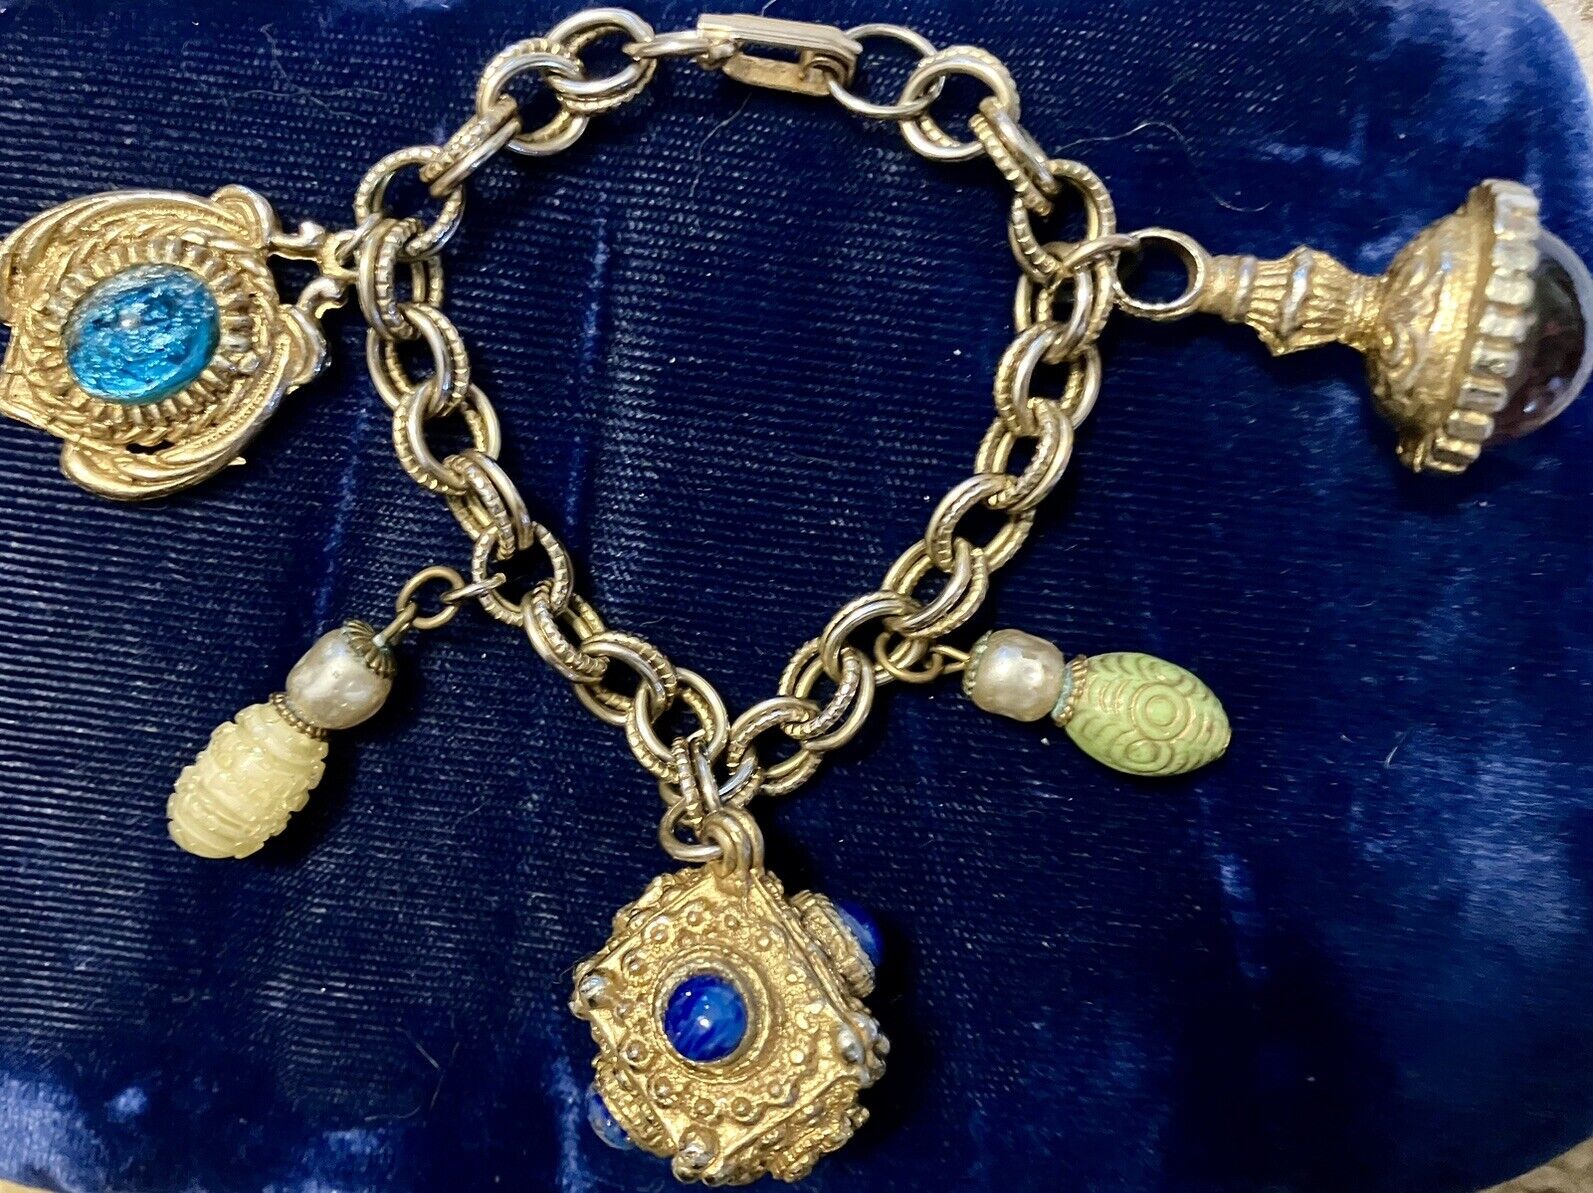 WONDERFUL Victorian Revival Five Charm Glass/ Bead  Intricate Fob Bracelet